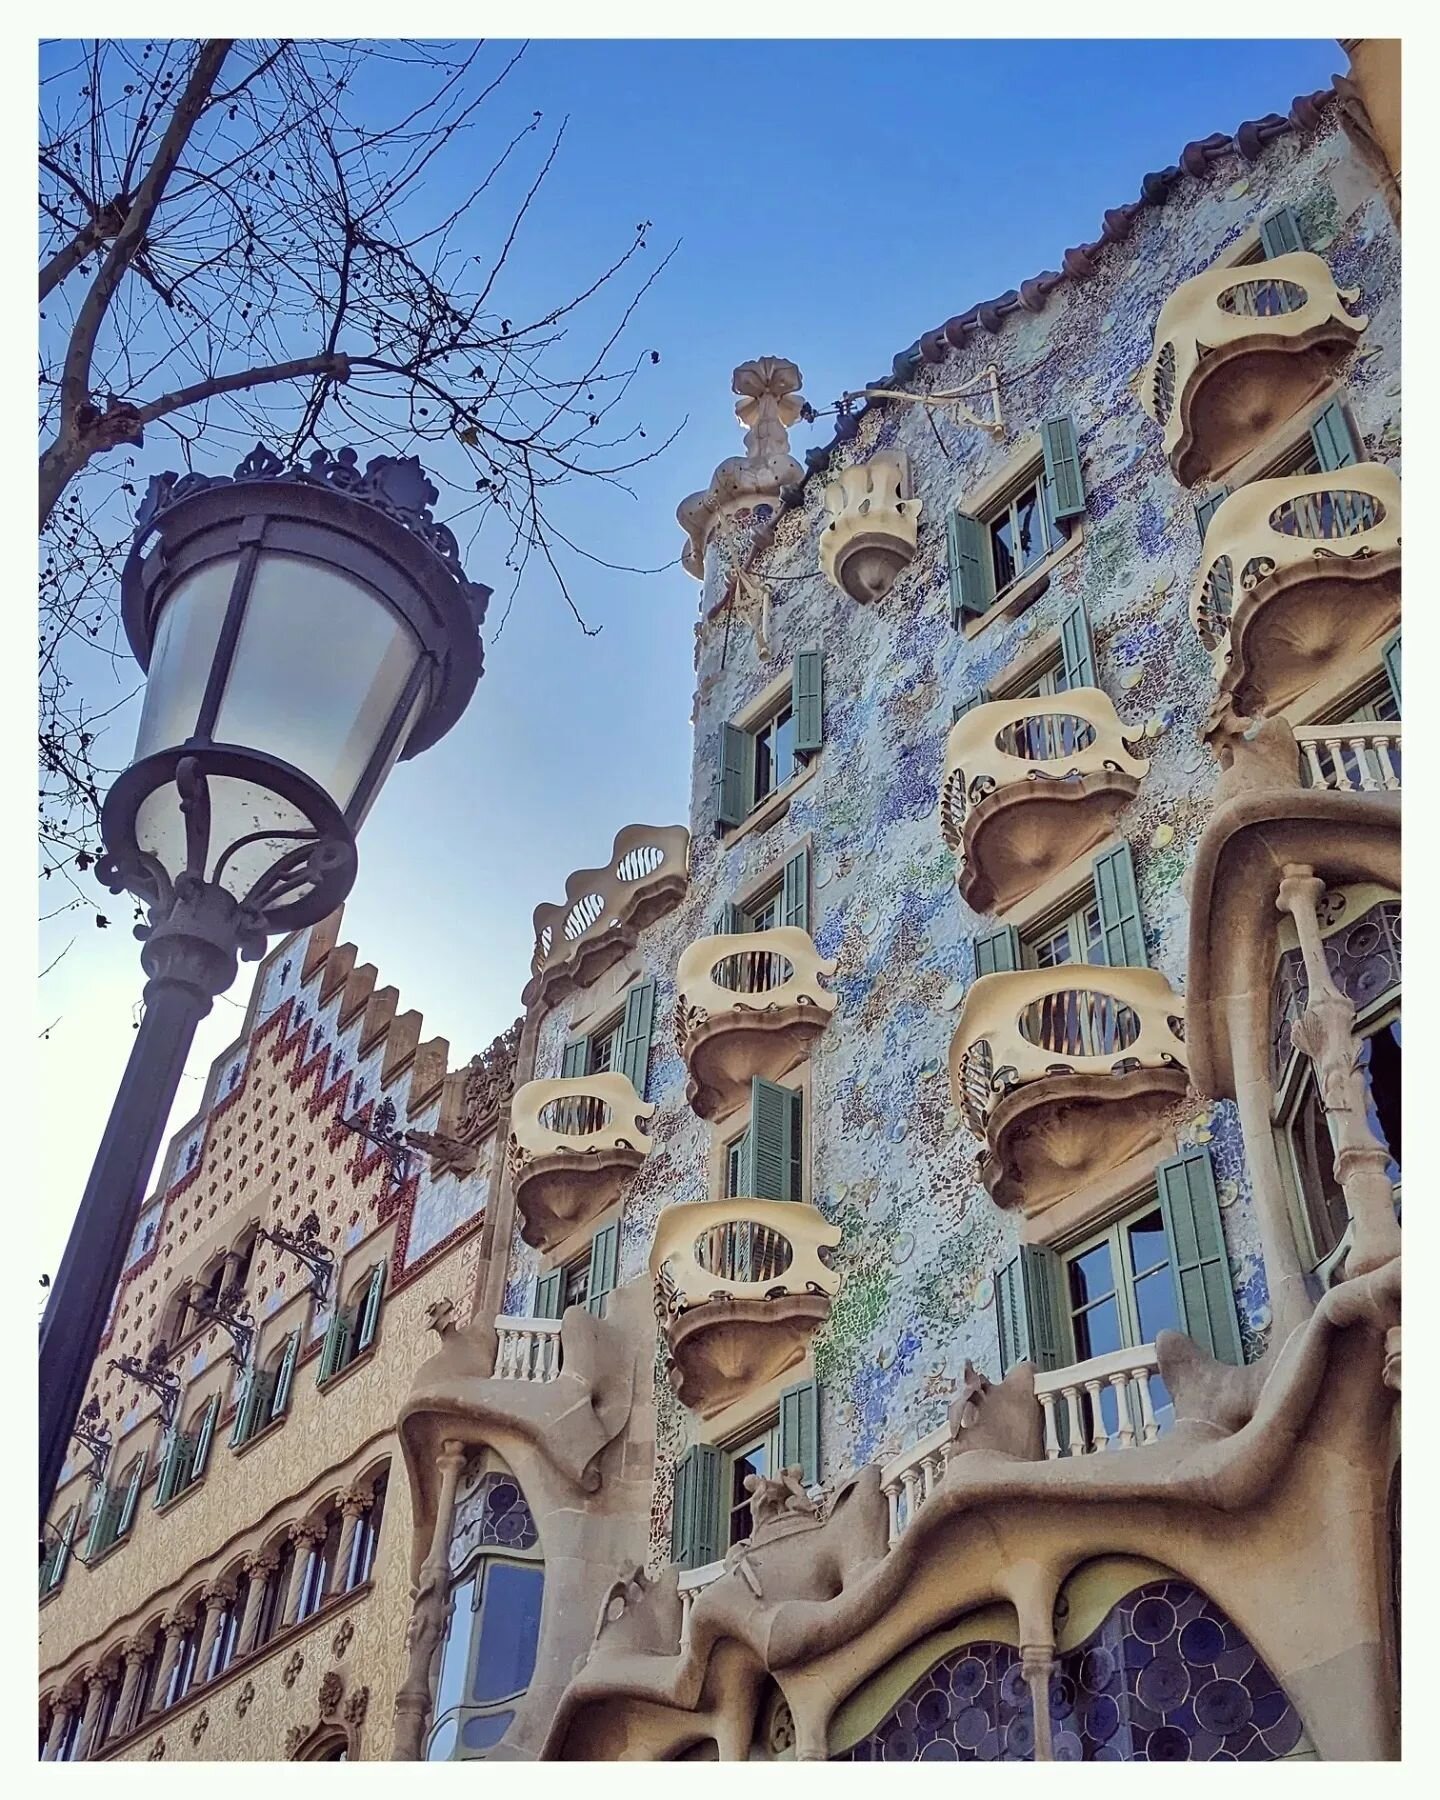 Recently toured Gaudi's inspiring Casa Batllo in Barcelona. Got us thinking - possible future birdhouse design?! 🤔